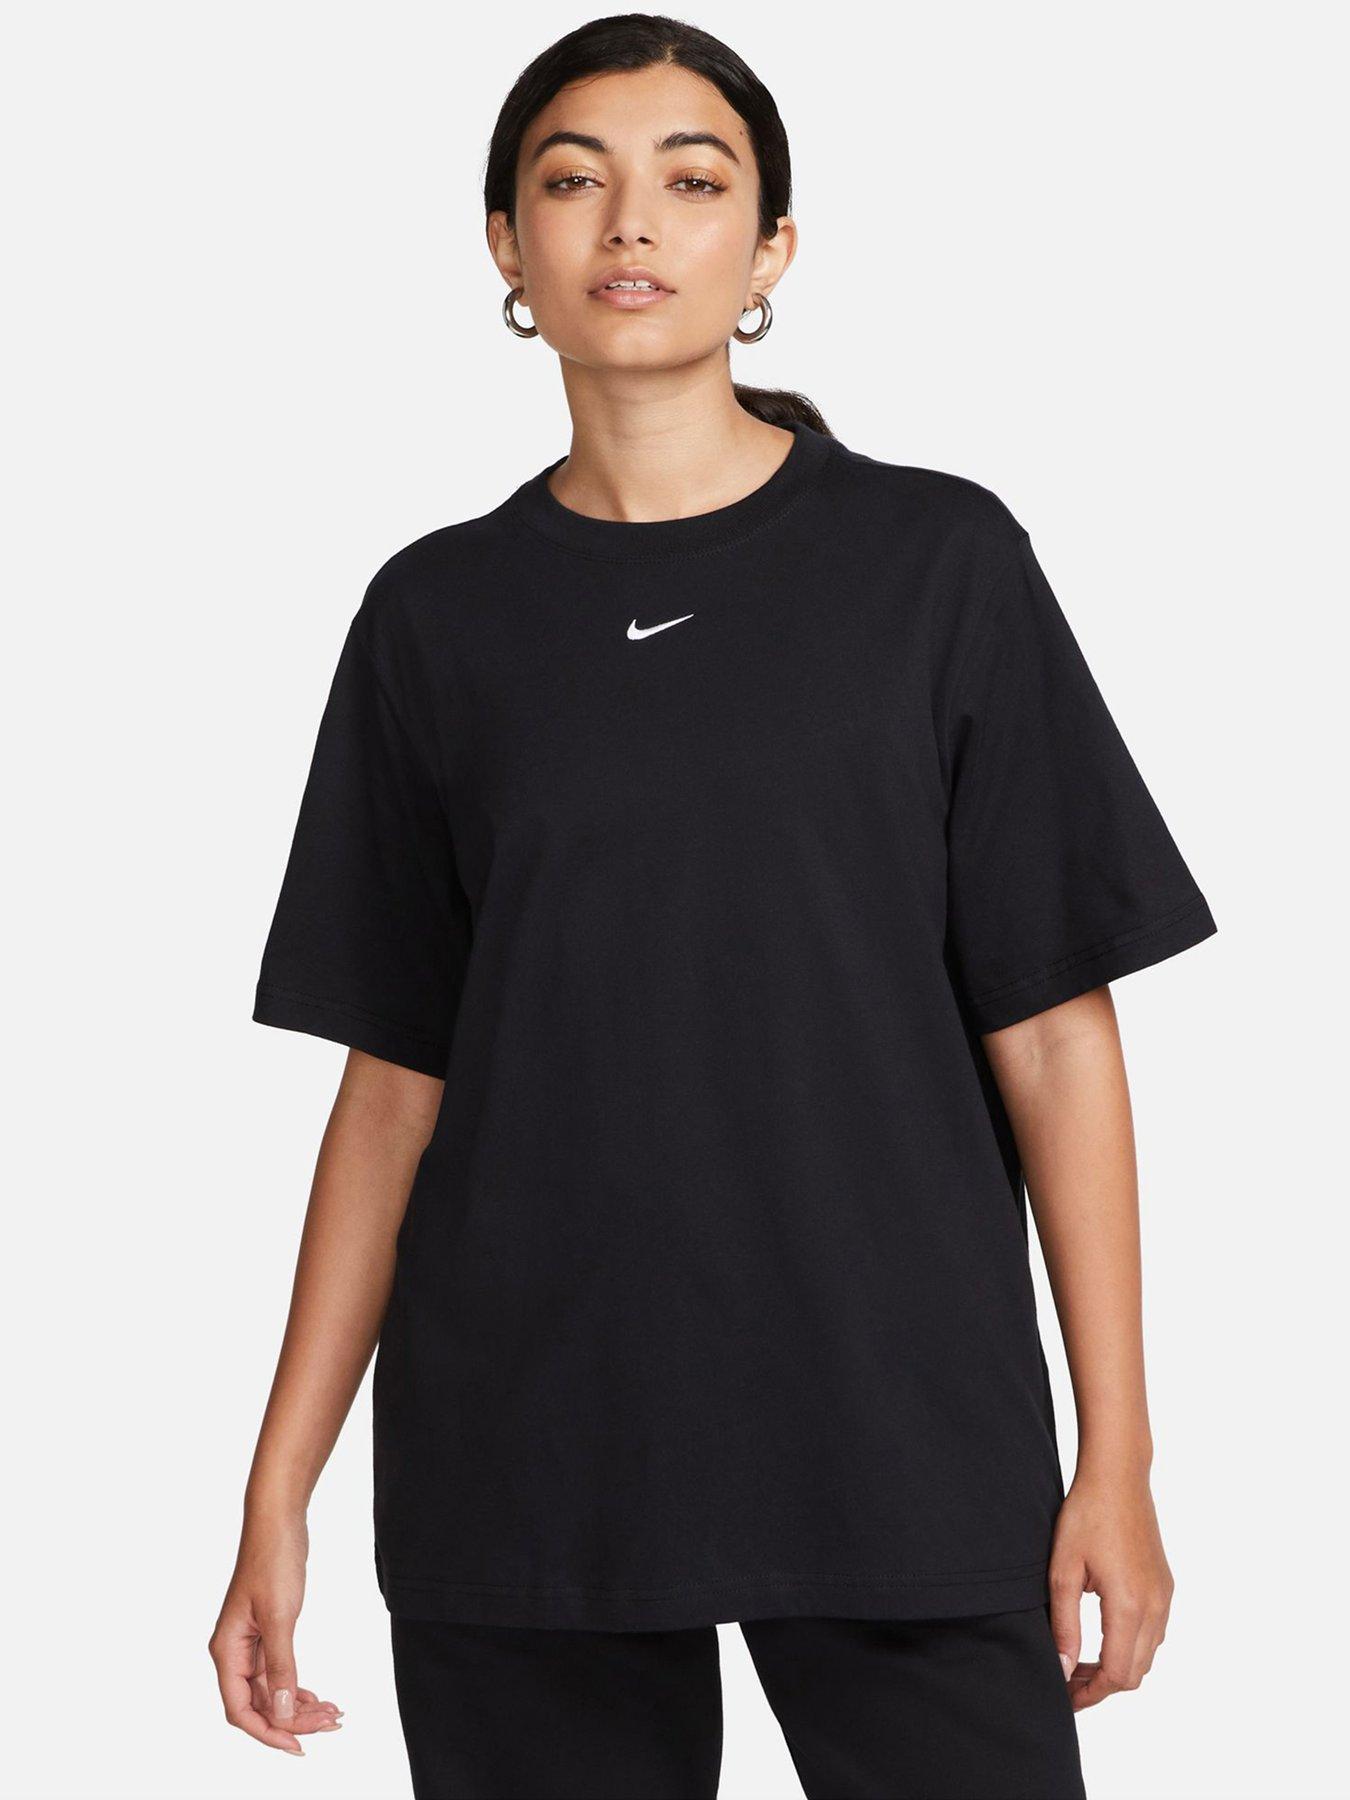 https://media.very.ie/i/littlewoodsireland/VL39F_SQ1_0000000019_BLACK_WHITE_MDf/nike-womens-essential-t-shirt-blackwhite.jpg?$180x240_retinamobilex2$